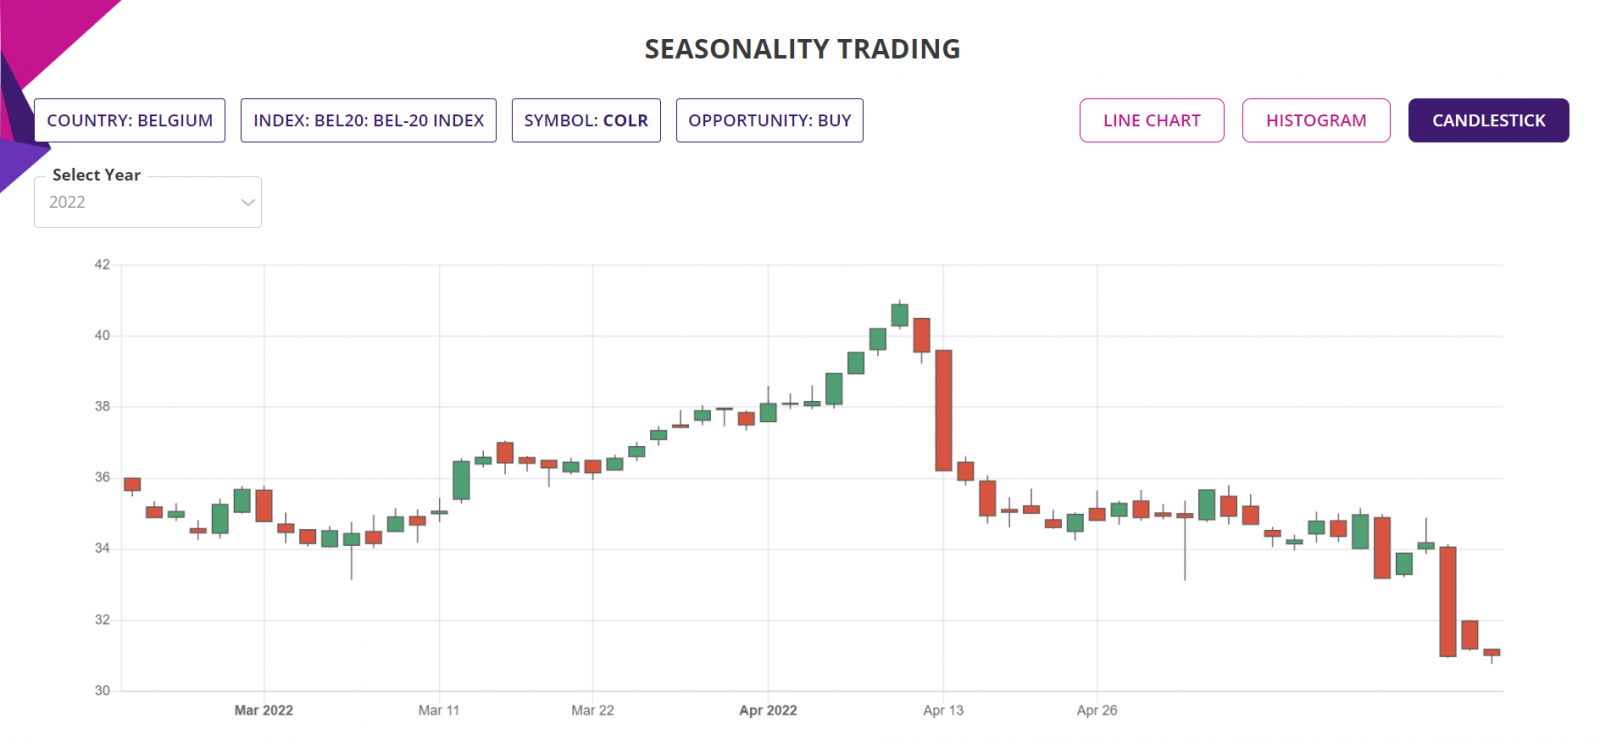 Seasonality trading strategy, detailed report, Candlestick chart